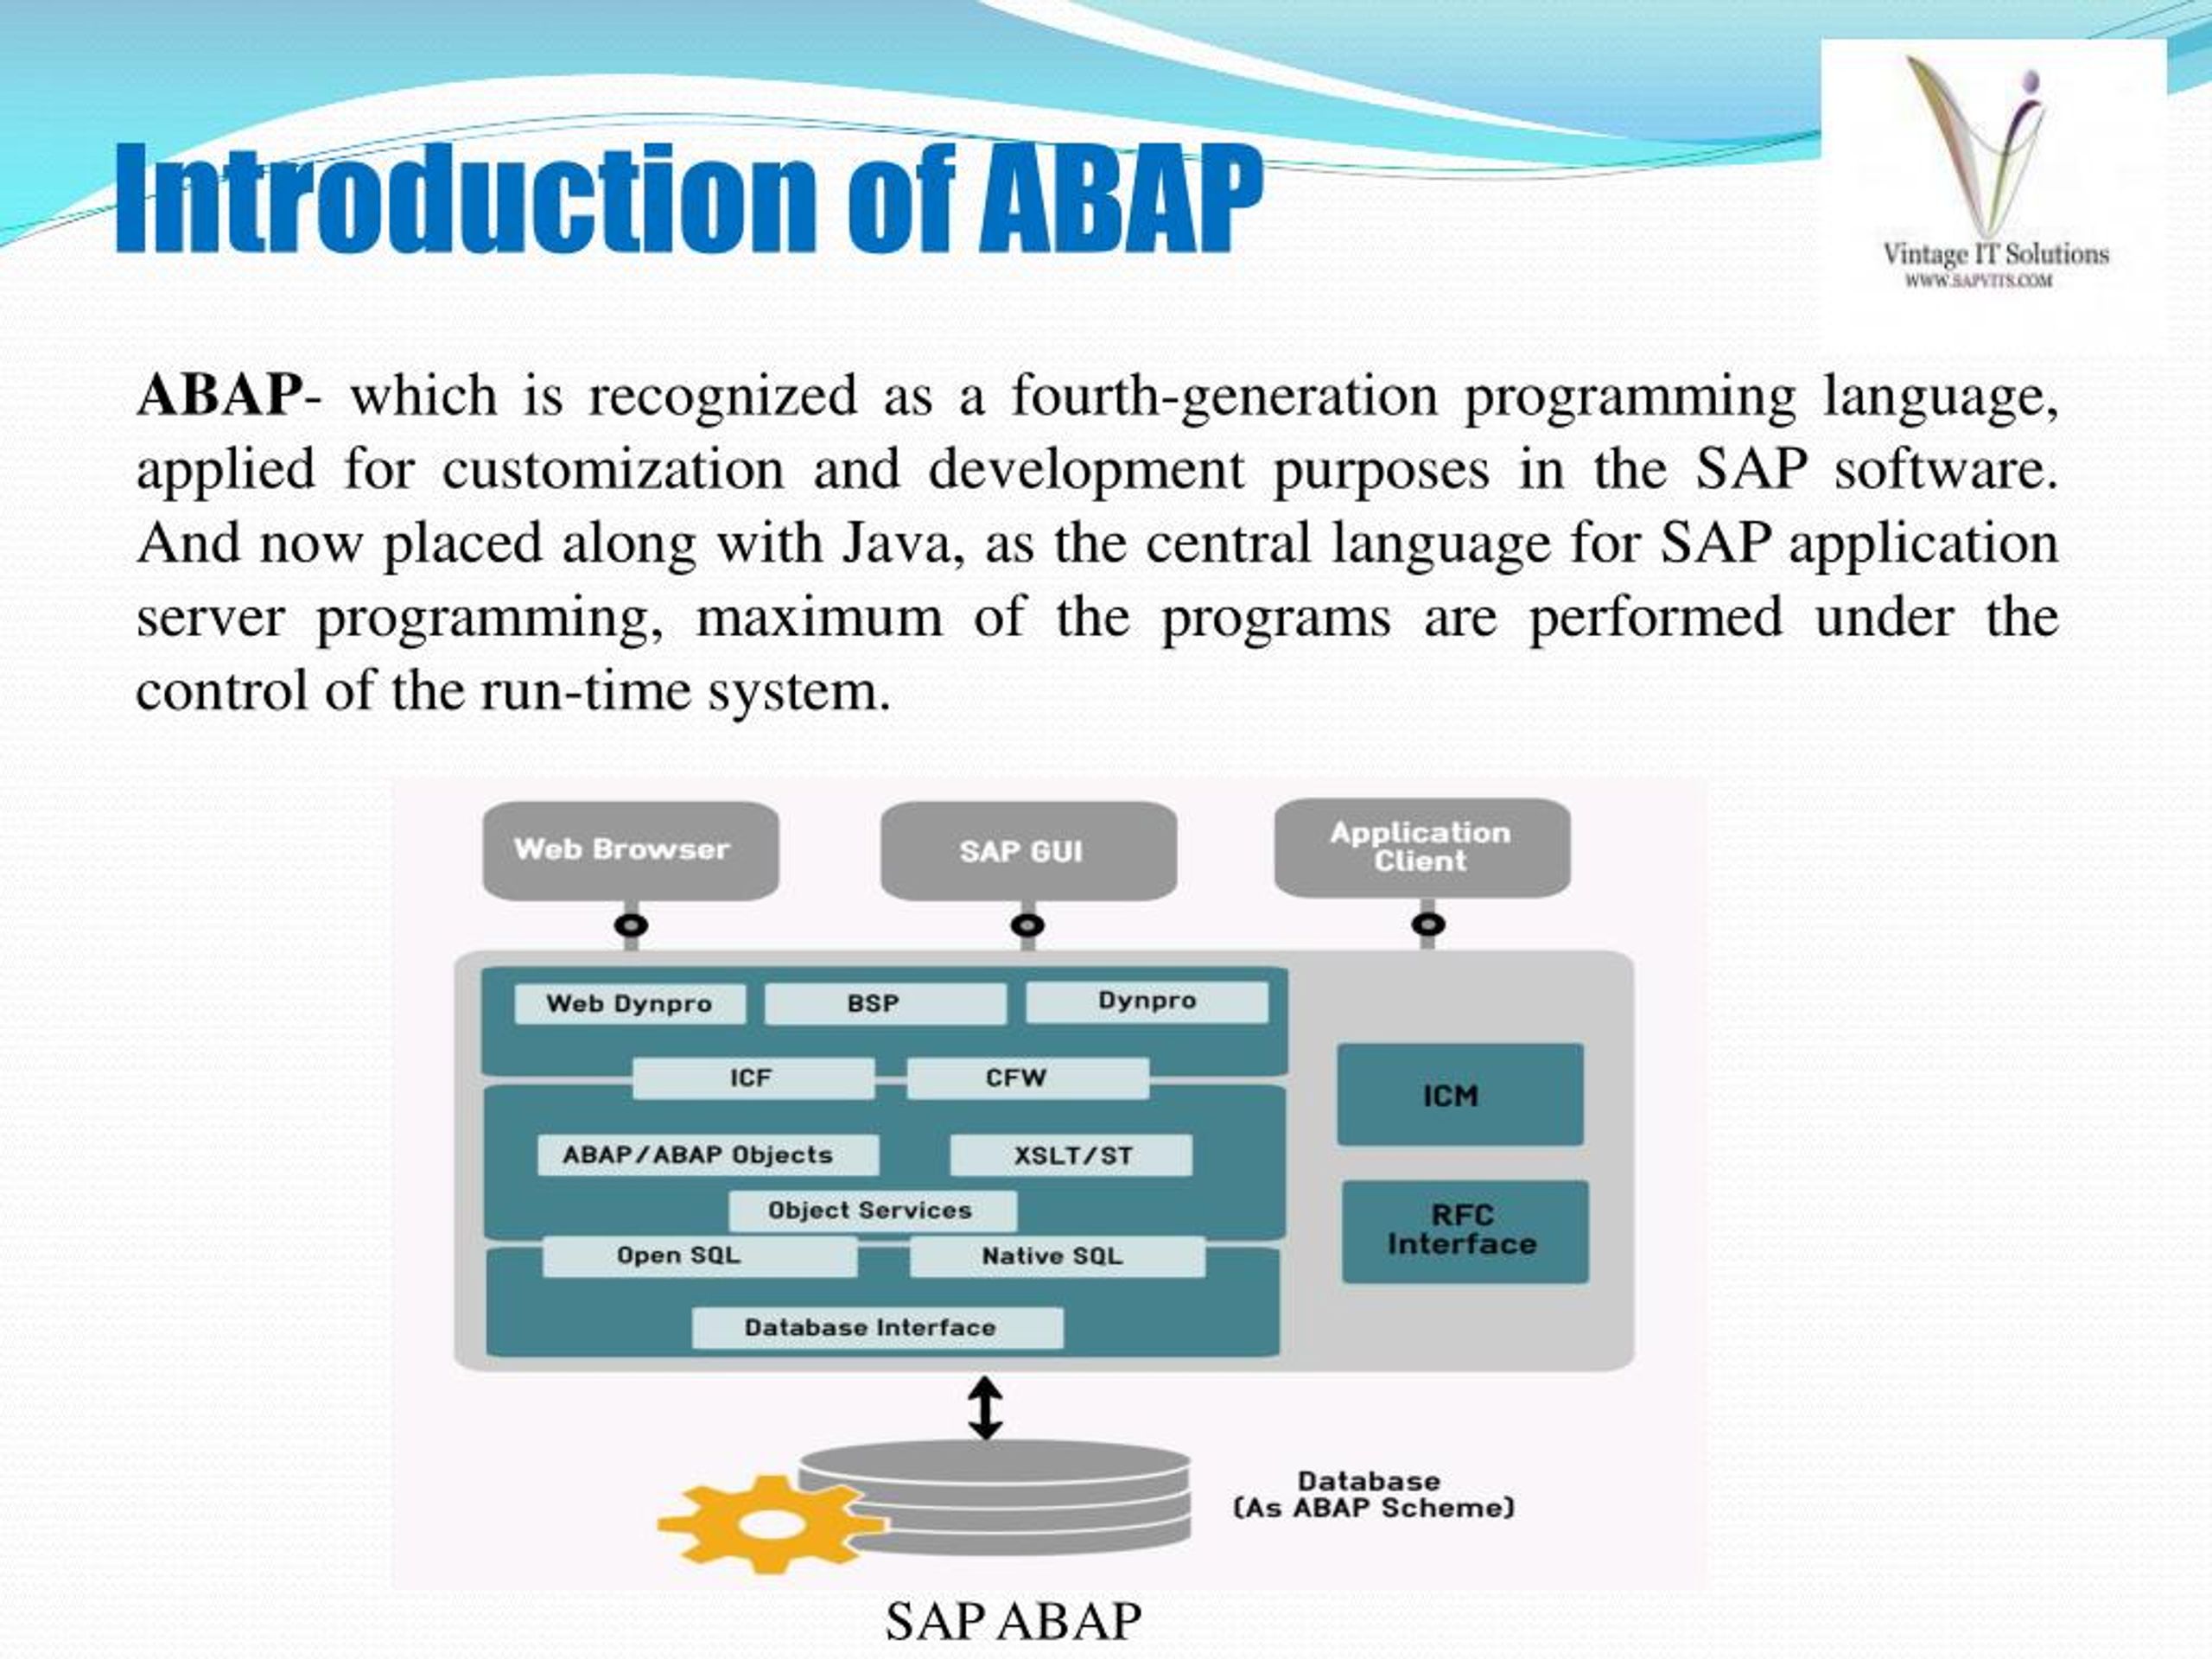 SAP ABAP Training in Pune PPT